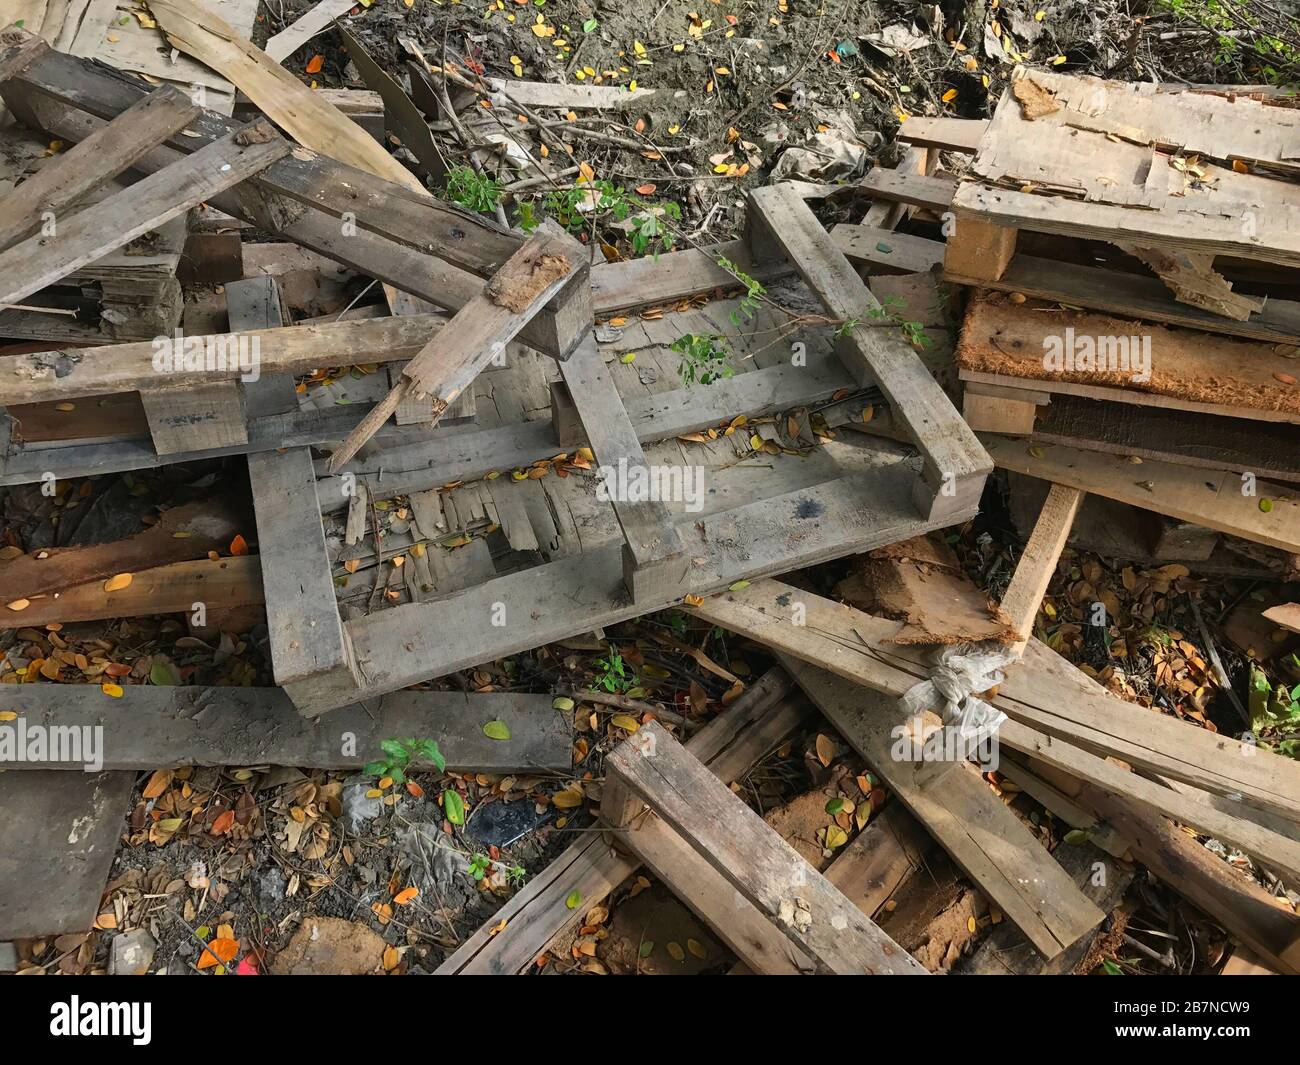 Scrap Wood Pile Stock Photo - Alamy